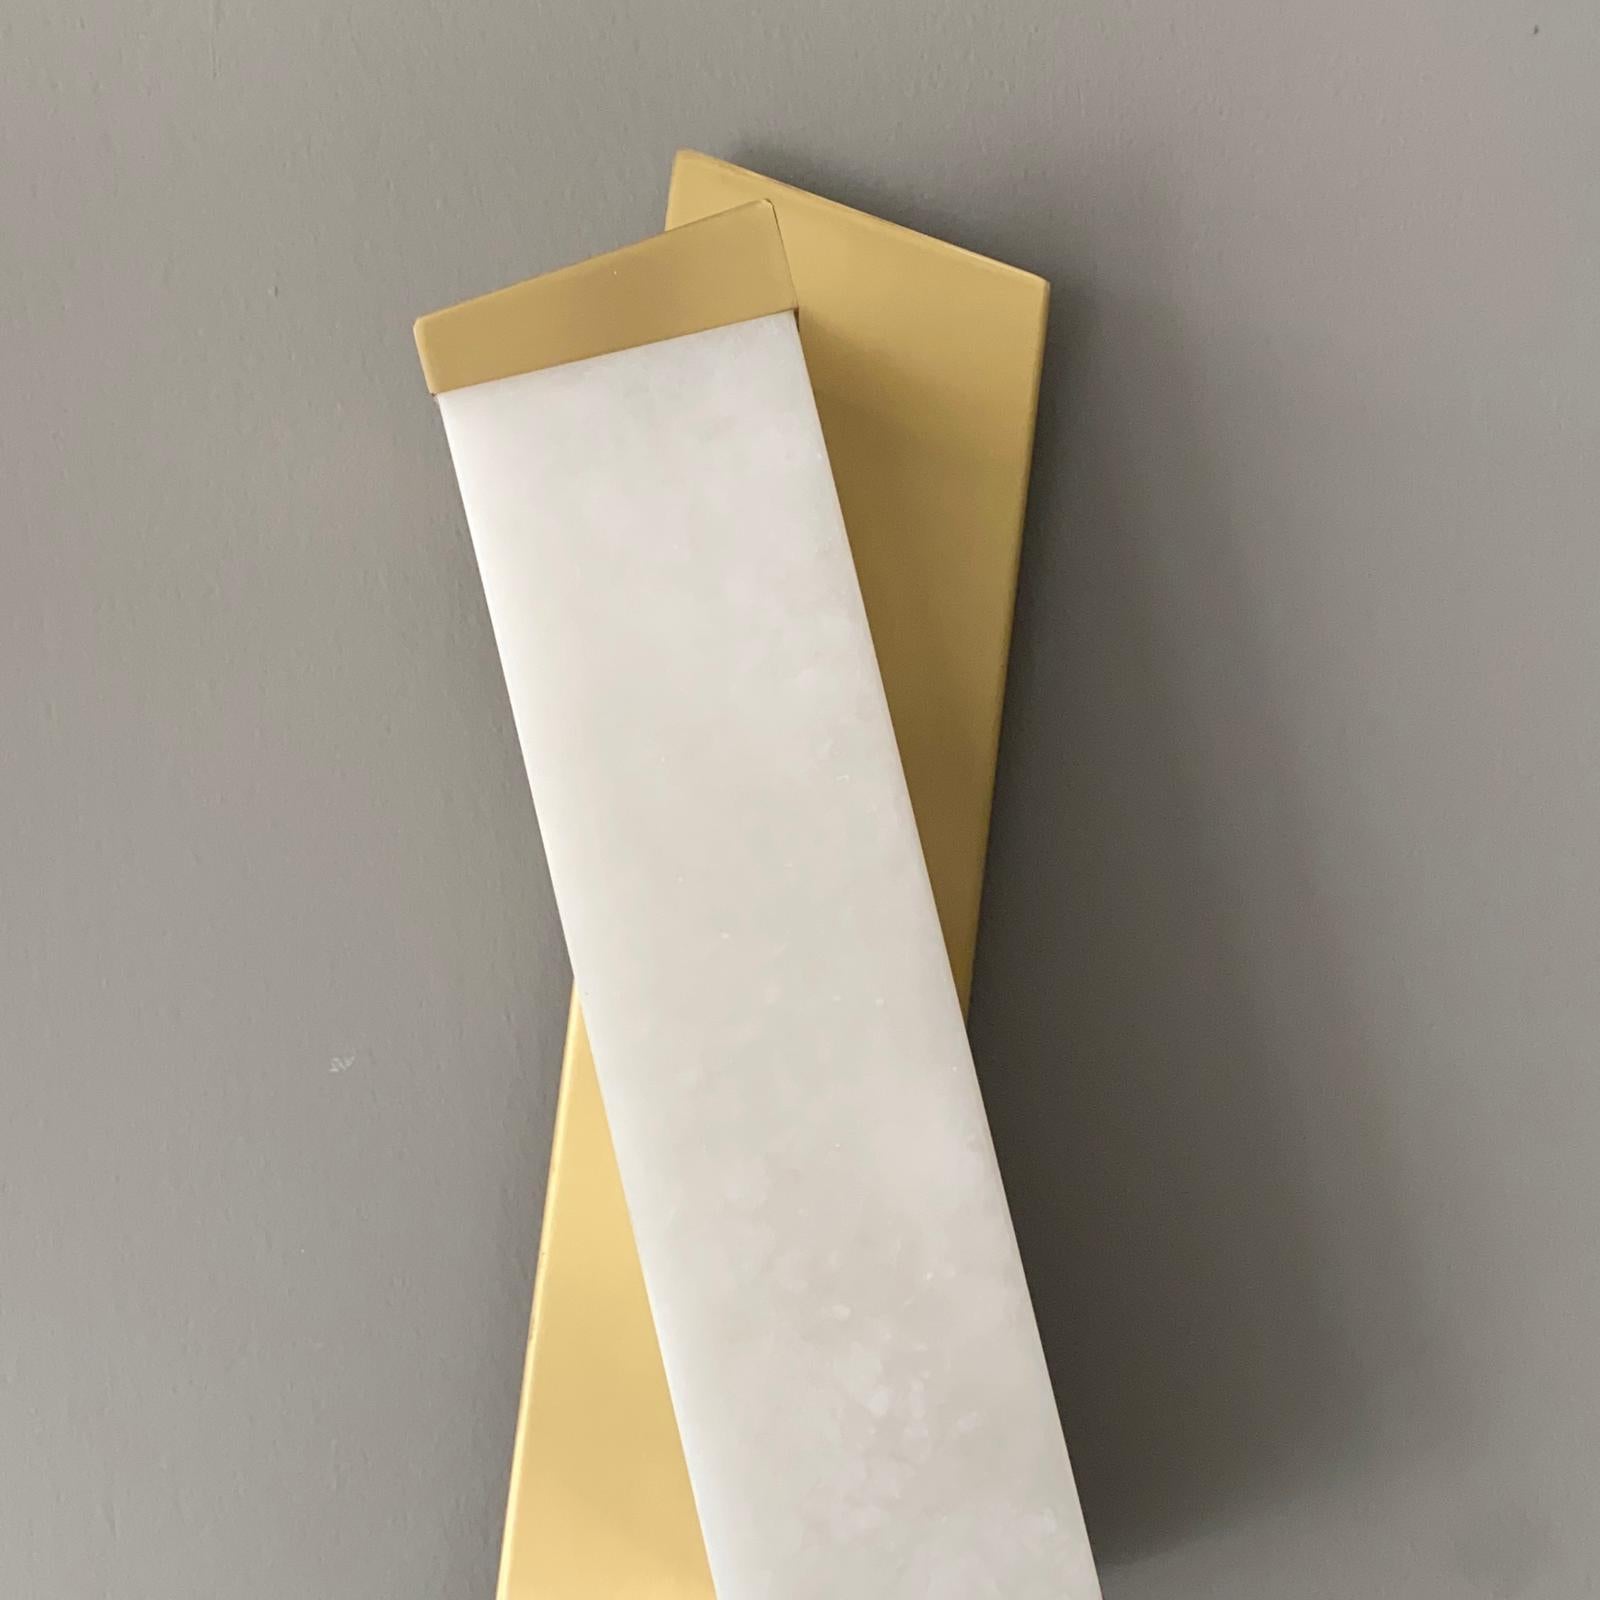 Contemporary Bespoke Italian Minimalist Geometric Offset Alabaster & Light Bronze Wall Light